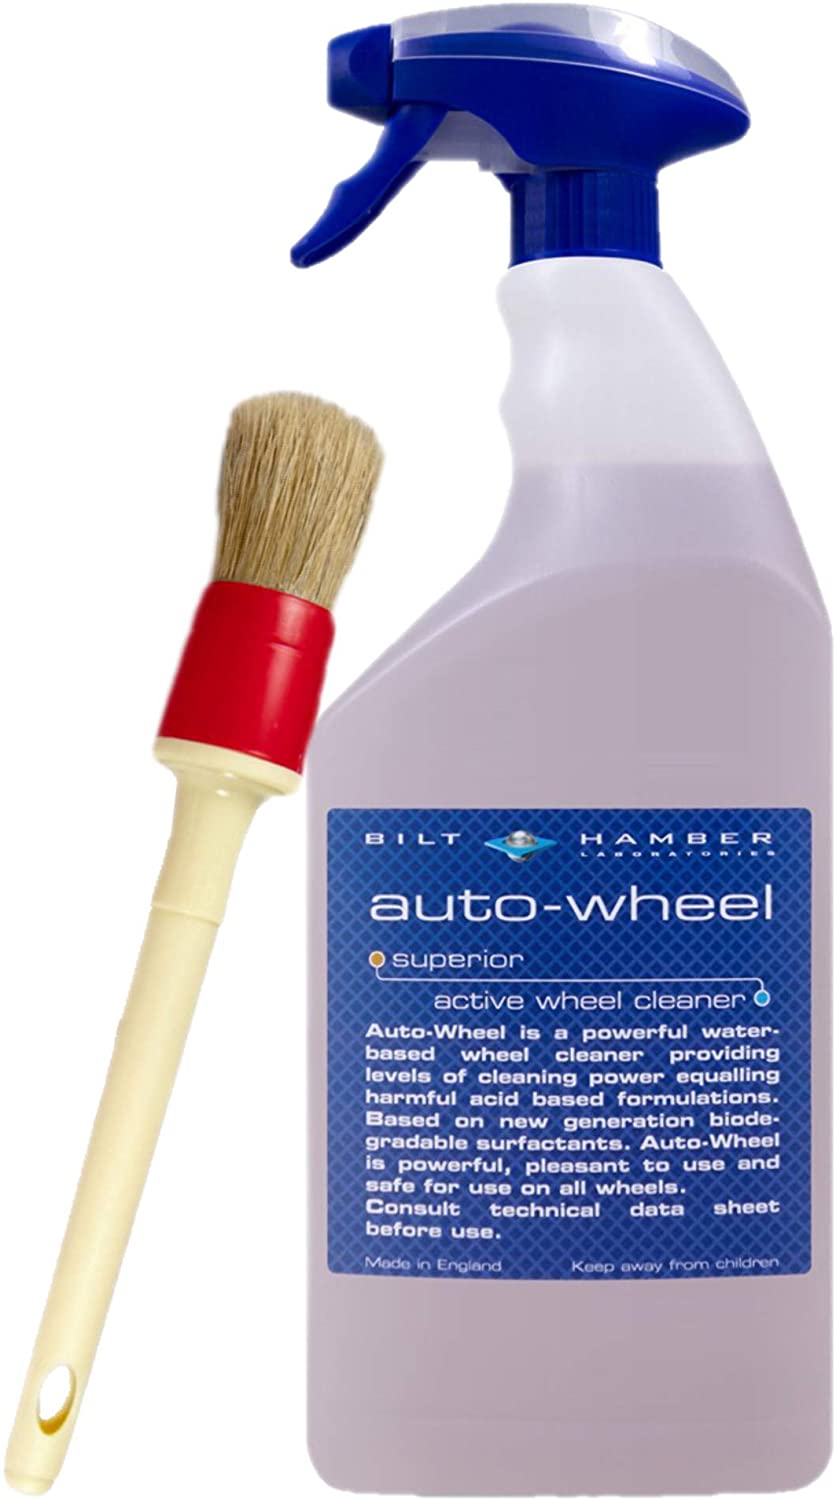 bilt-hamber-auto-wheel-alloy-wheel-cleaner